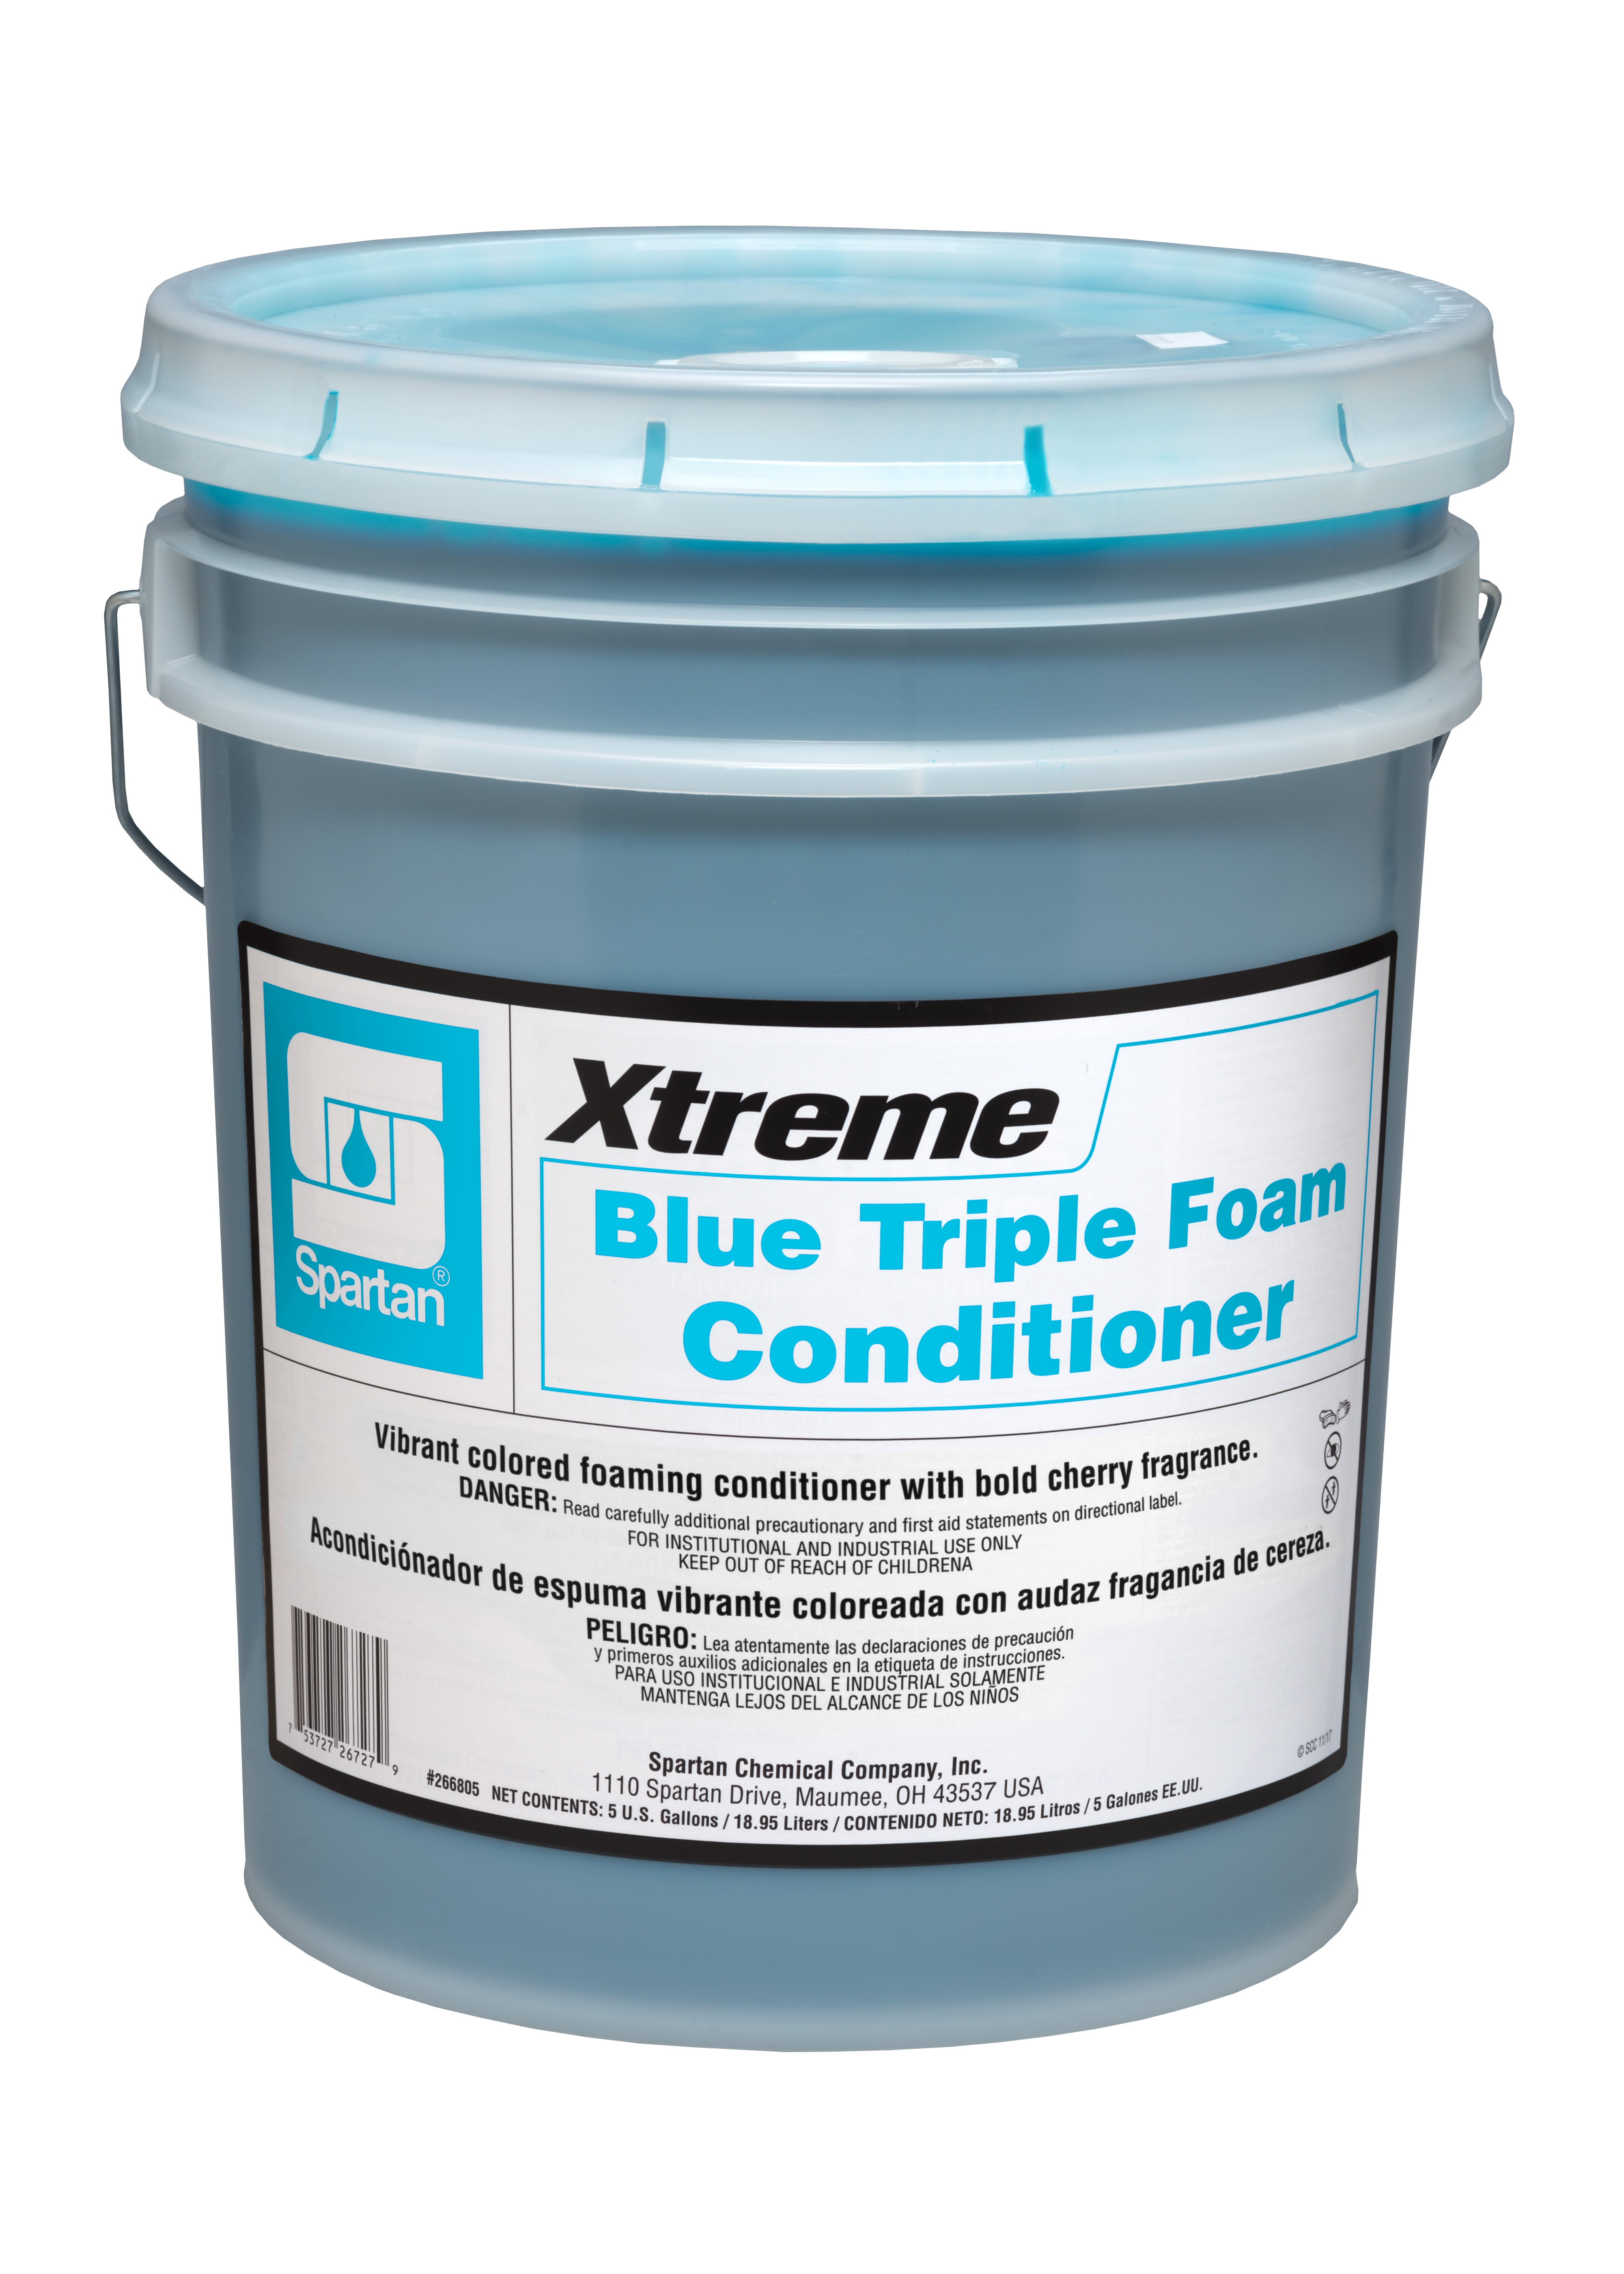 Spartan Chemical Company Xtreme Blue Triple Foam Conditioner, 5 GAL PAIL